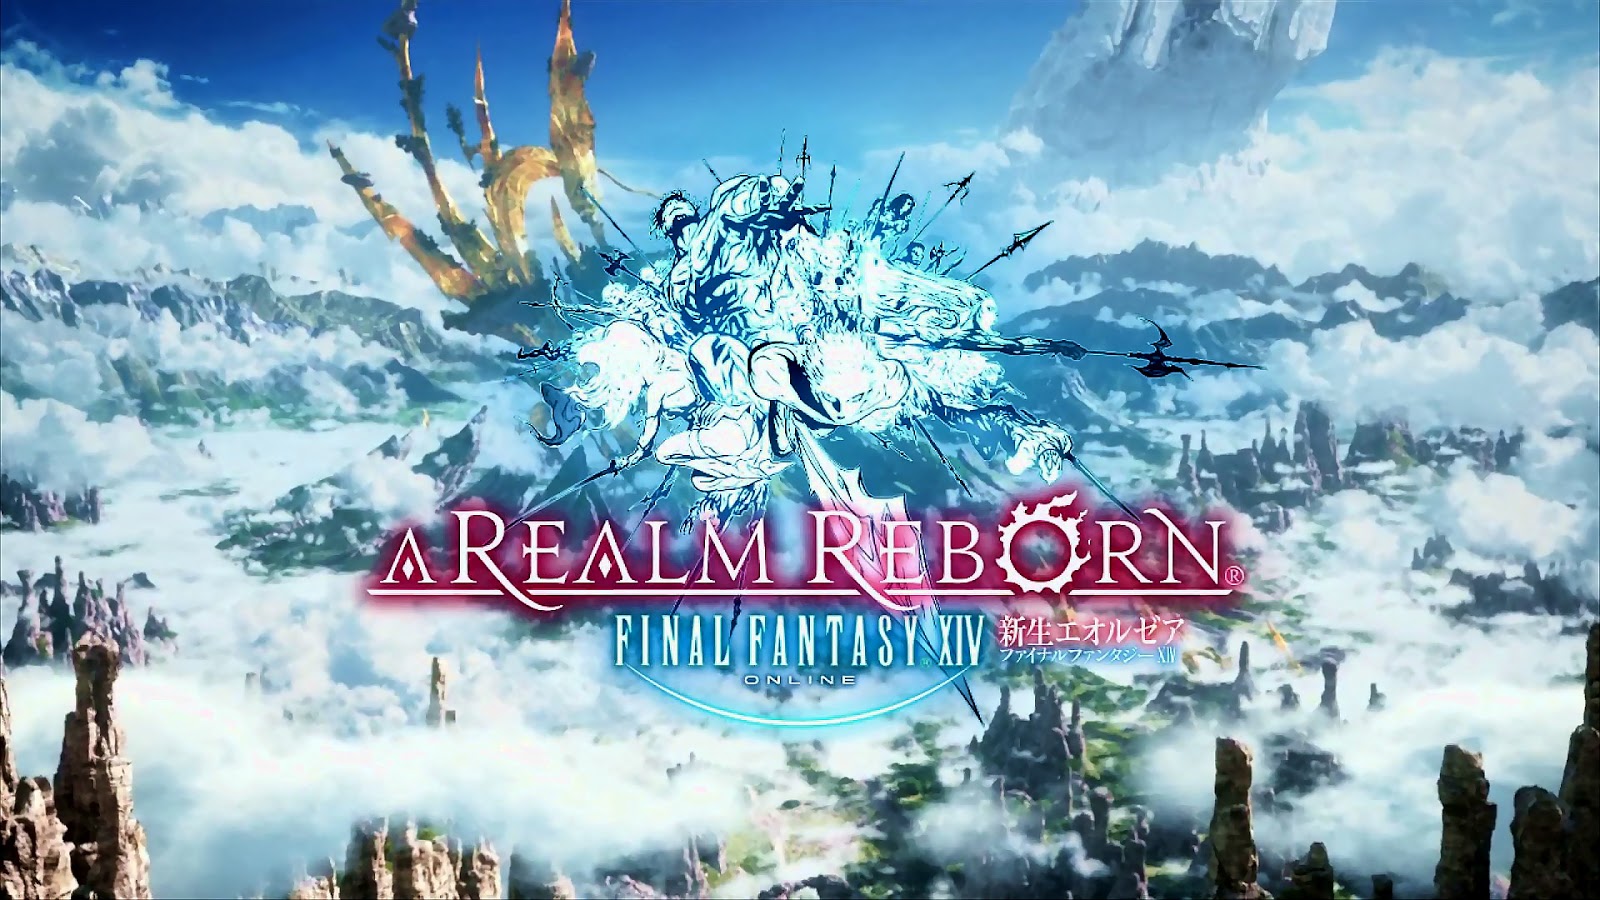 Final Fantasy XIV – A Realm Reborn